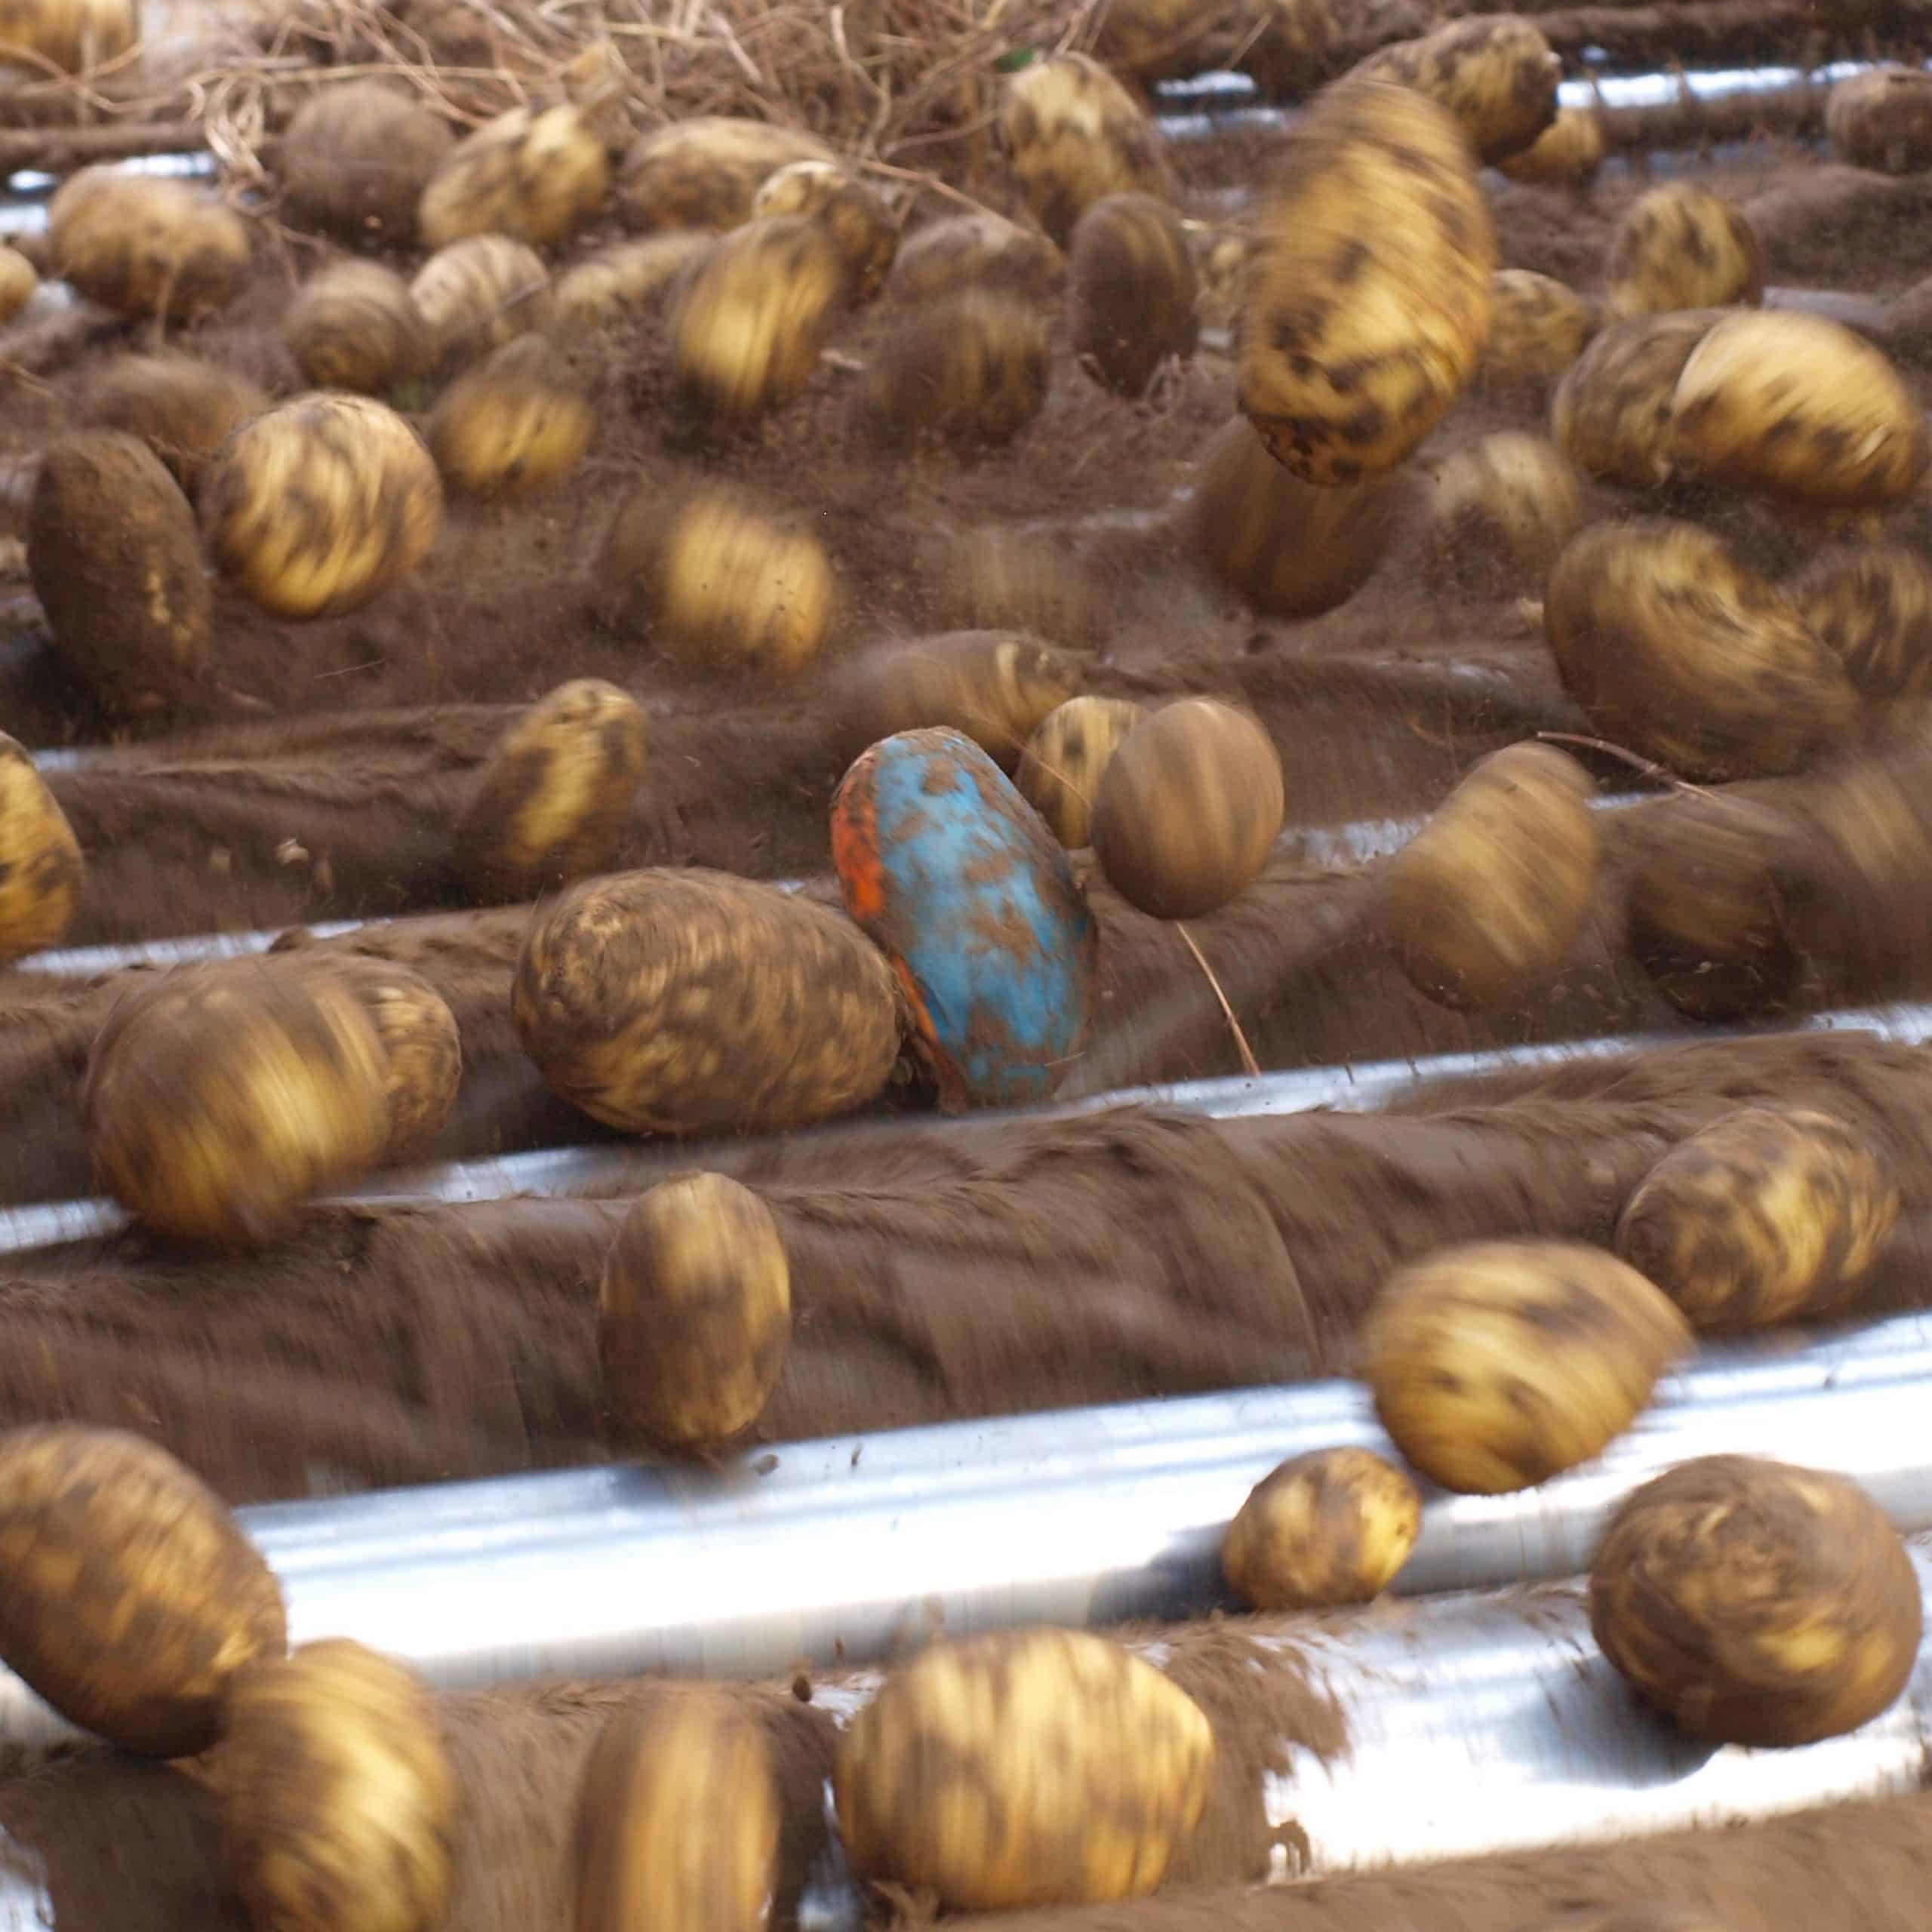 tuberlog electronic potato used by potato growers to help fine tune harvesting equipment